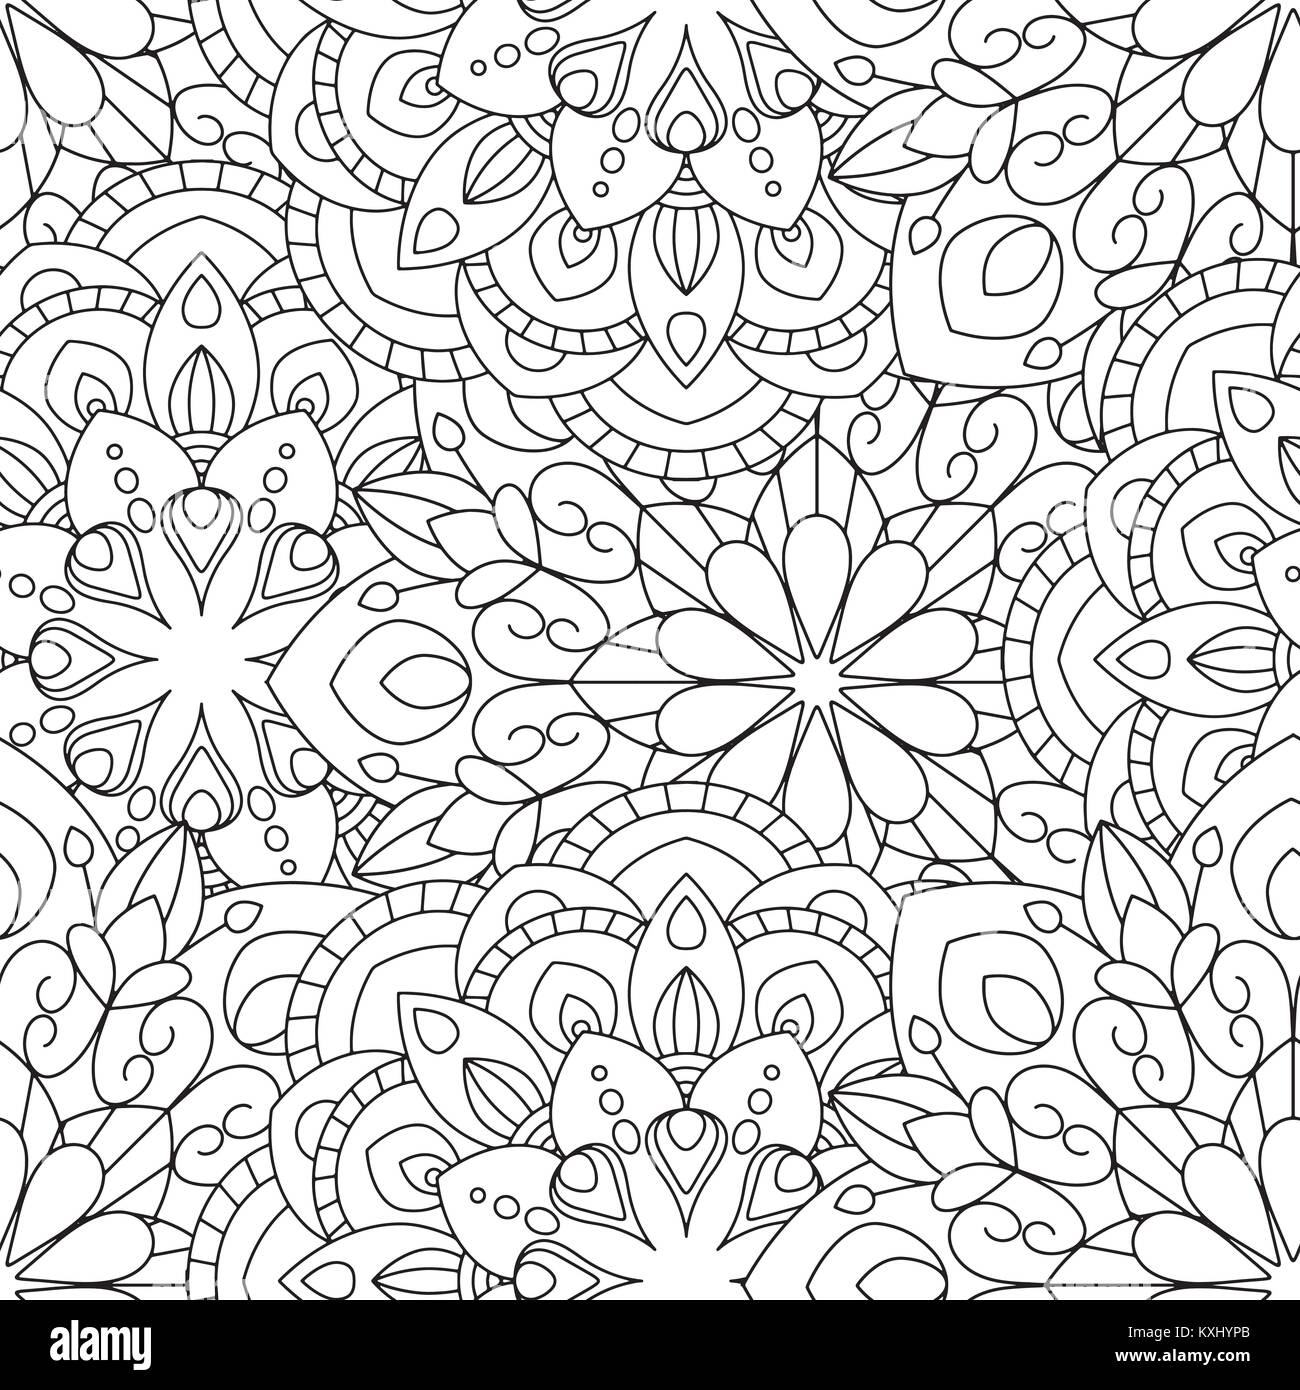 Doodles Mandalas Seamless Pattern Background Stock Vector